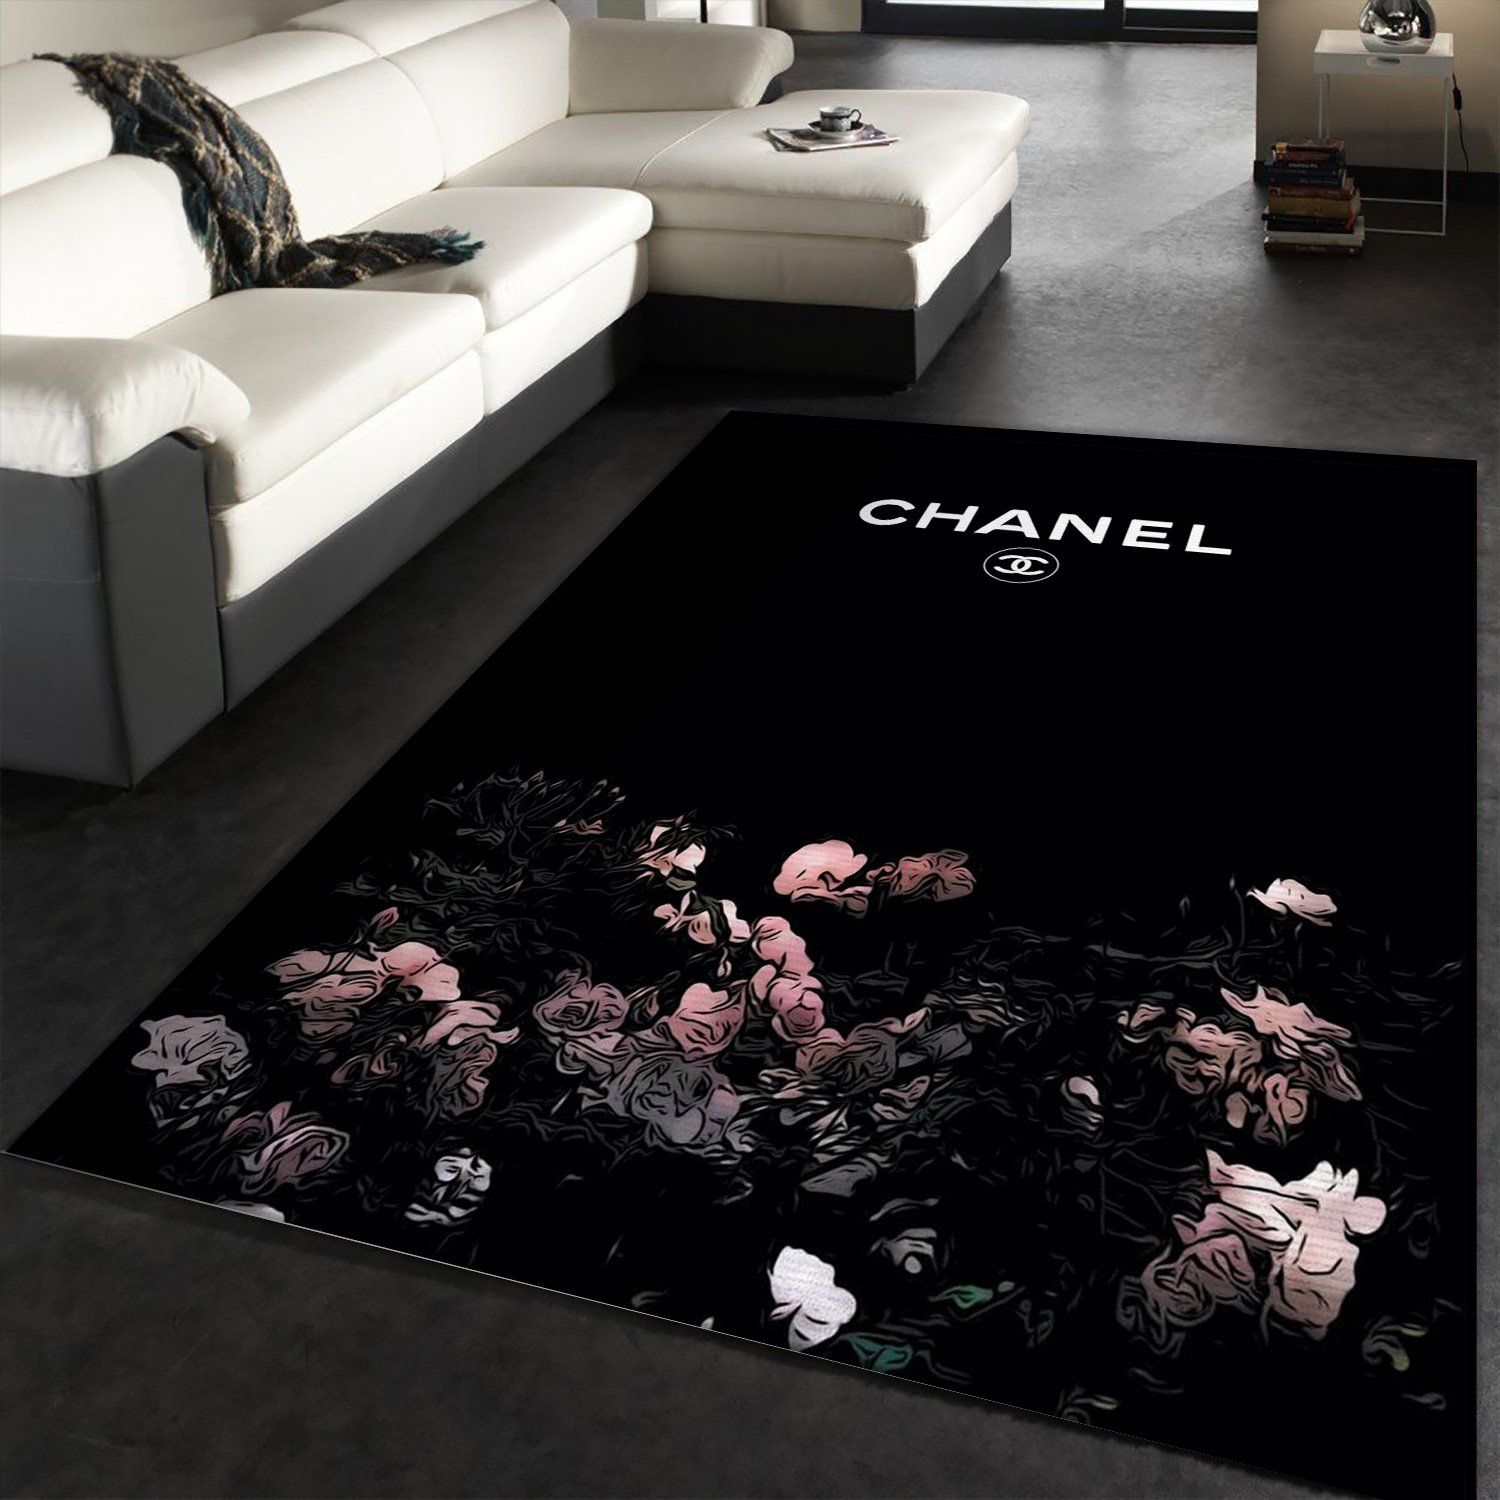 Chanel Night Sky Luxury Brand Carpet Rug Limited Edition - Horusteez